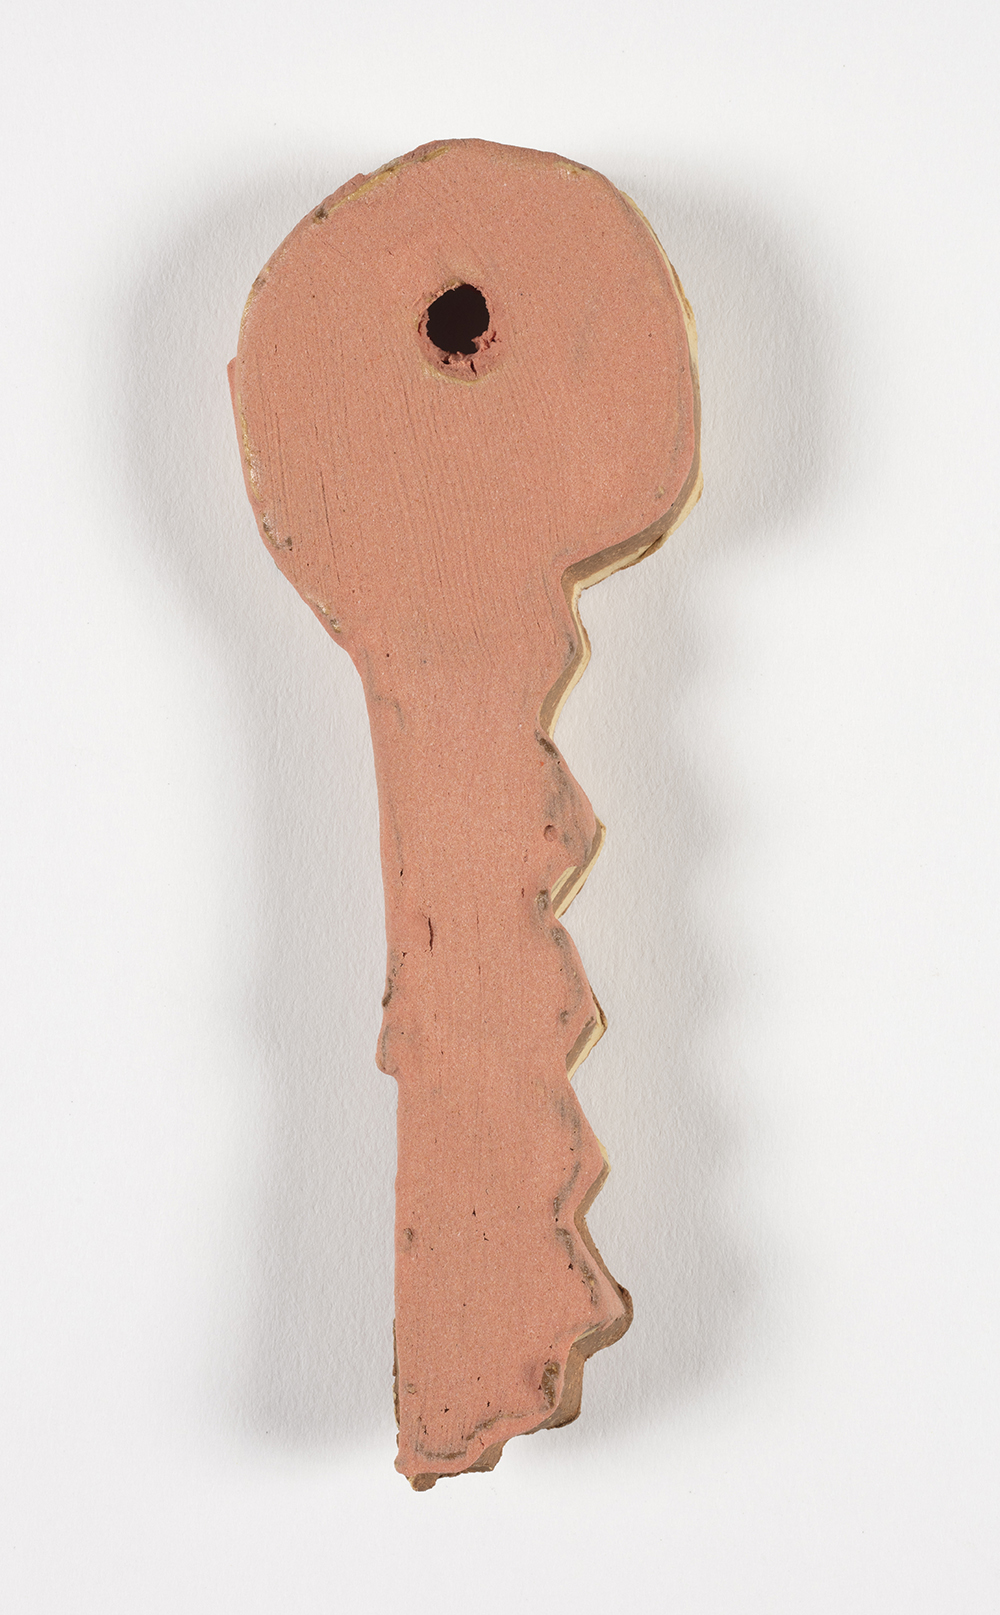 Kevin McNamee-Tweed.<em> Key (Kisser)</em>, 2019. Glazed ceramic, 4 x 1 1/2 inches (10.2 x 3.8 cm)